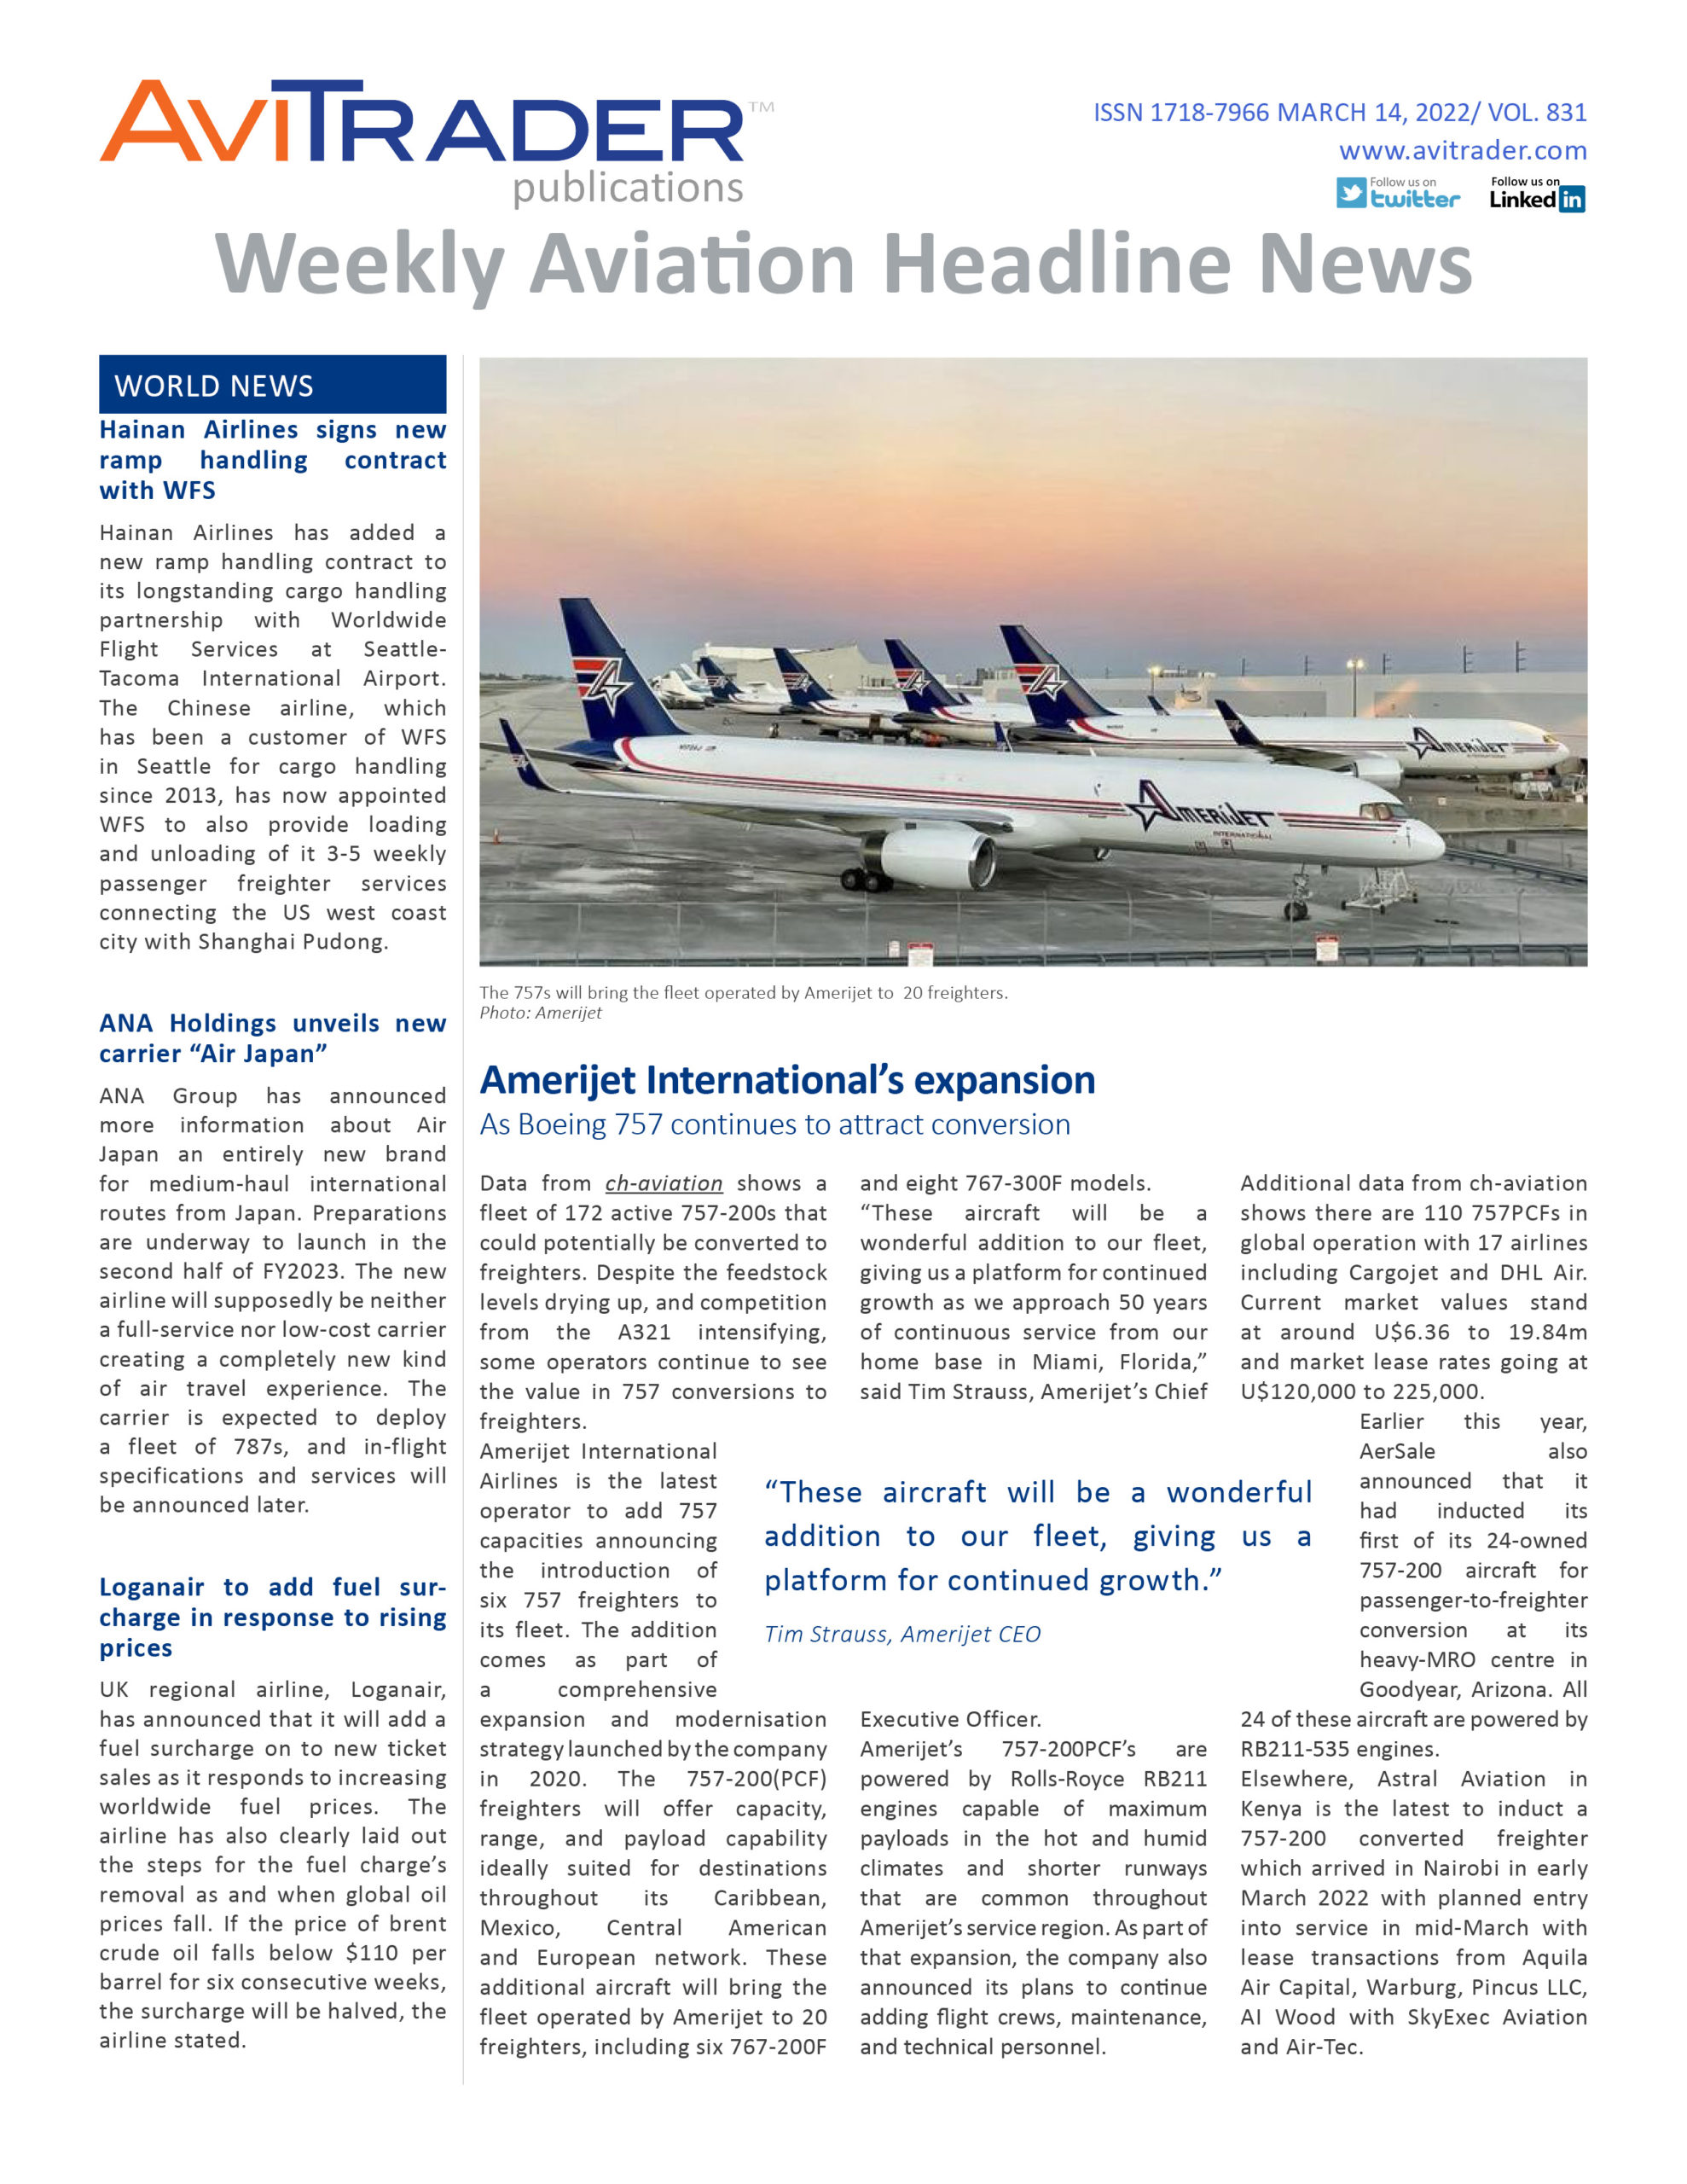 AviTrader_Weekly_Headline_News_Cover_2022-03-14